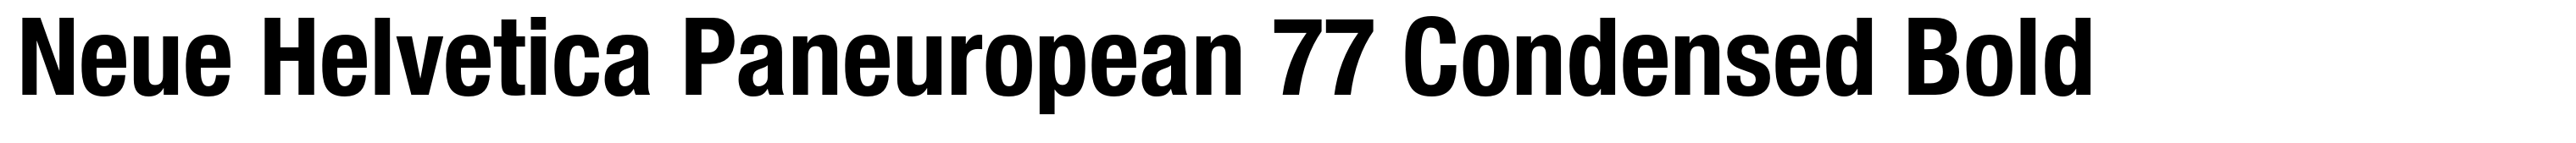 Neue Helvetica Paneuropean 77 Condensed Bold